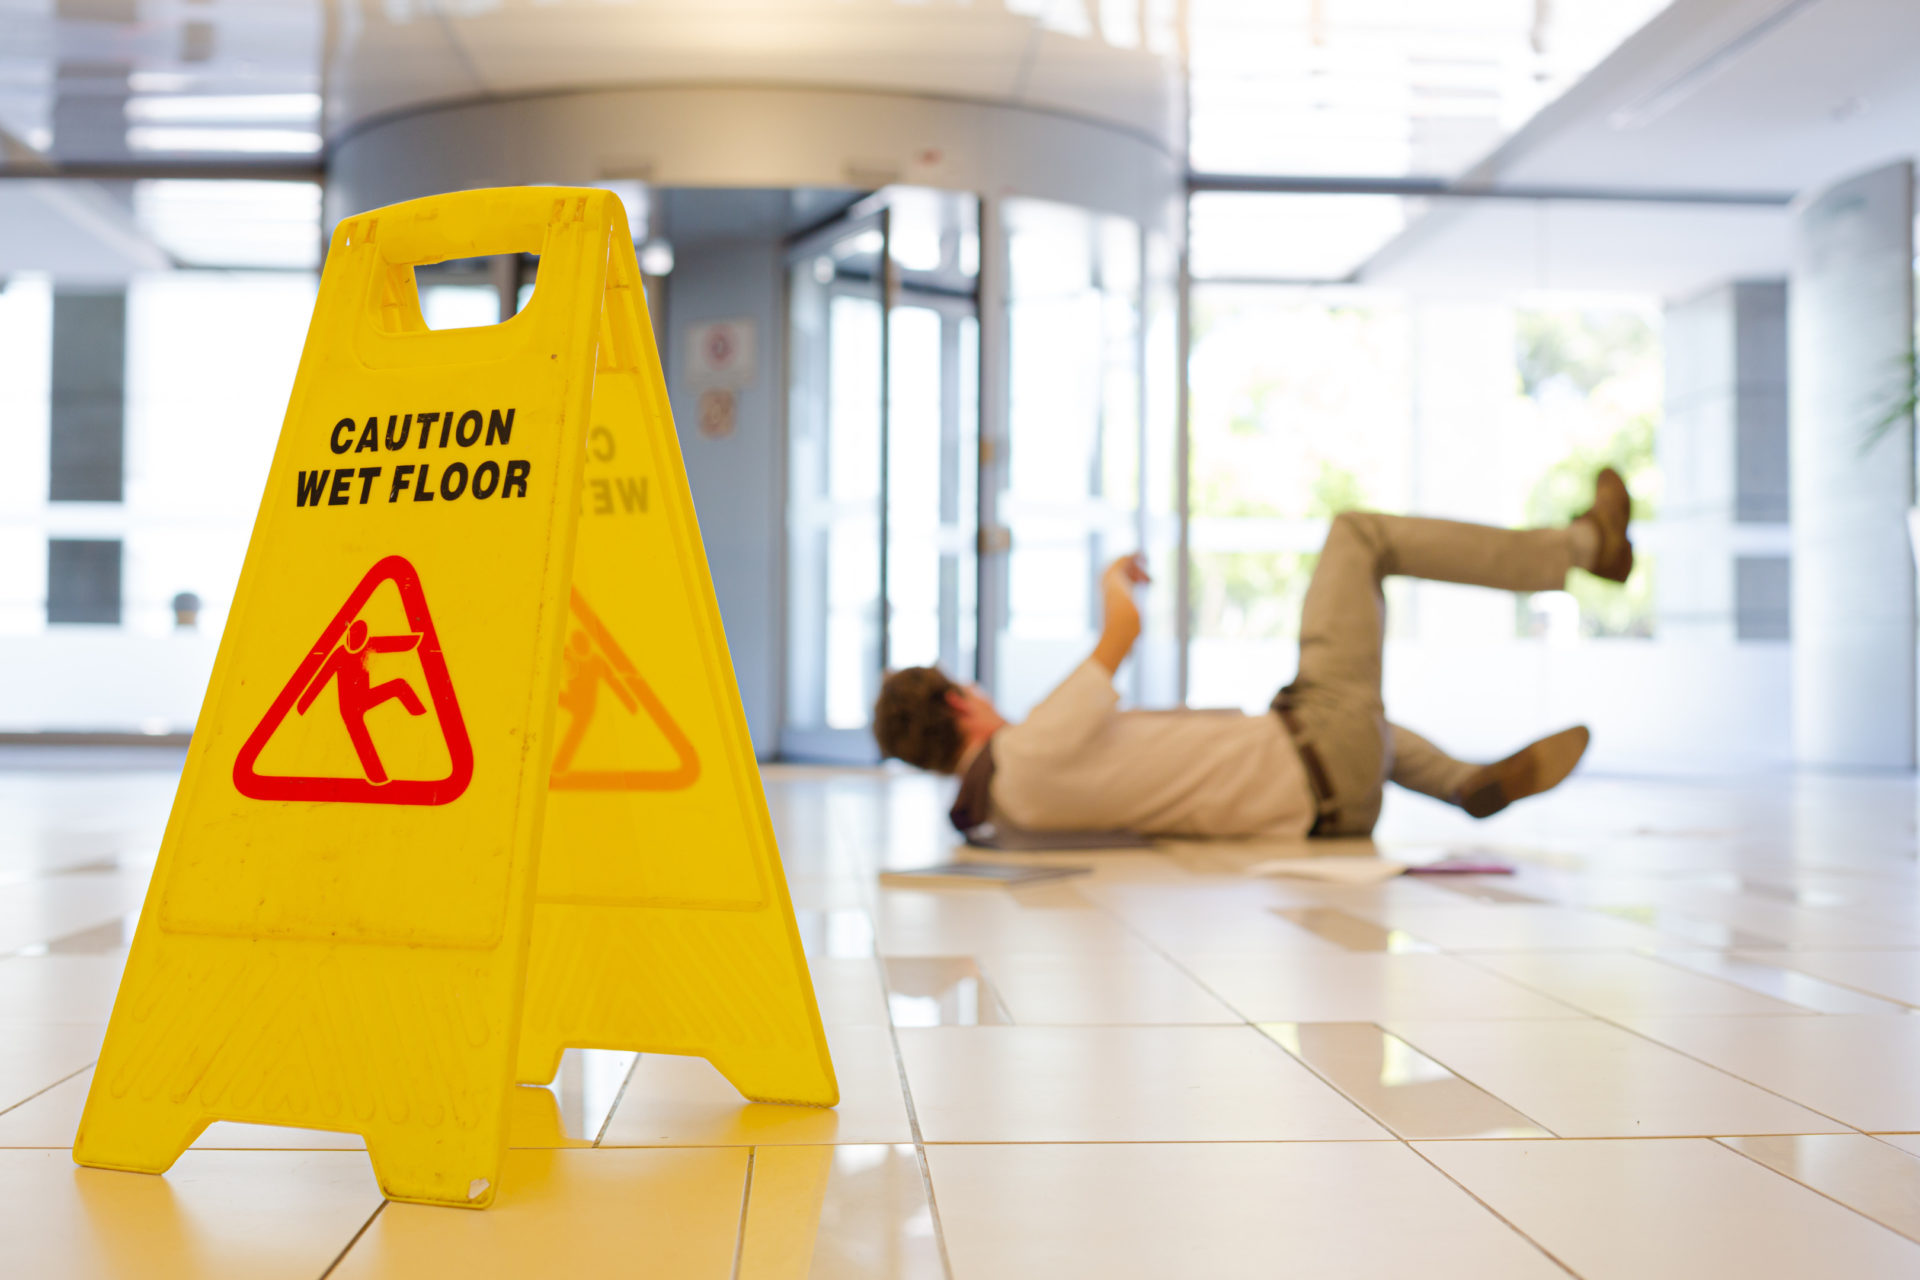 Caution Wet Floor sign on a wet floor - male falling on the floor